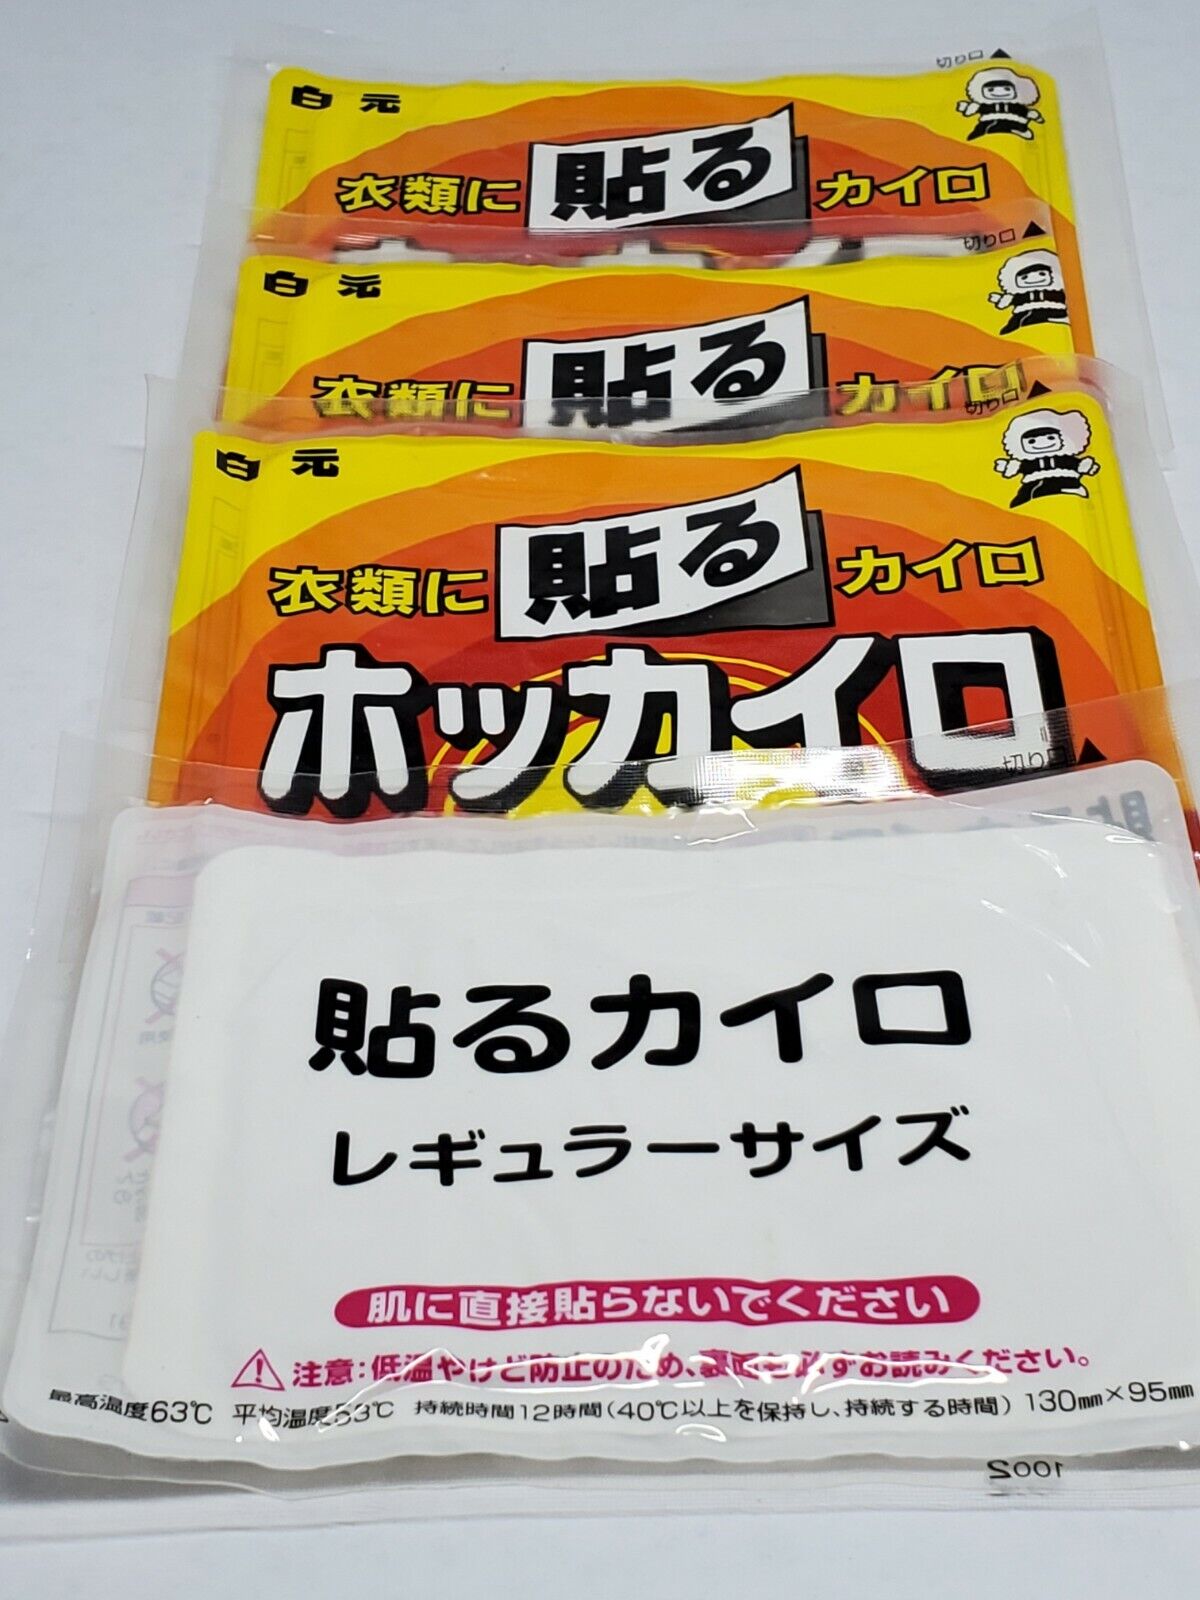 Clothing Adhesive Body Warmer Haru Onpacks Kairo Mycoal 4 Pcs Pack Japan-heat